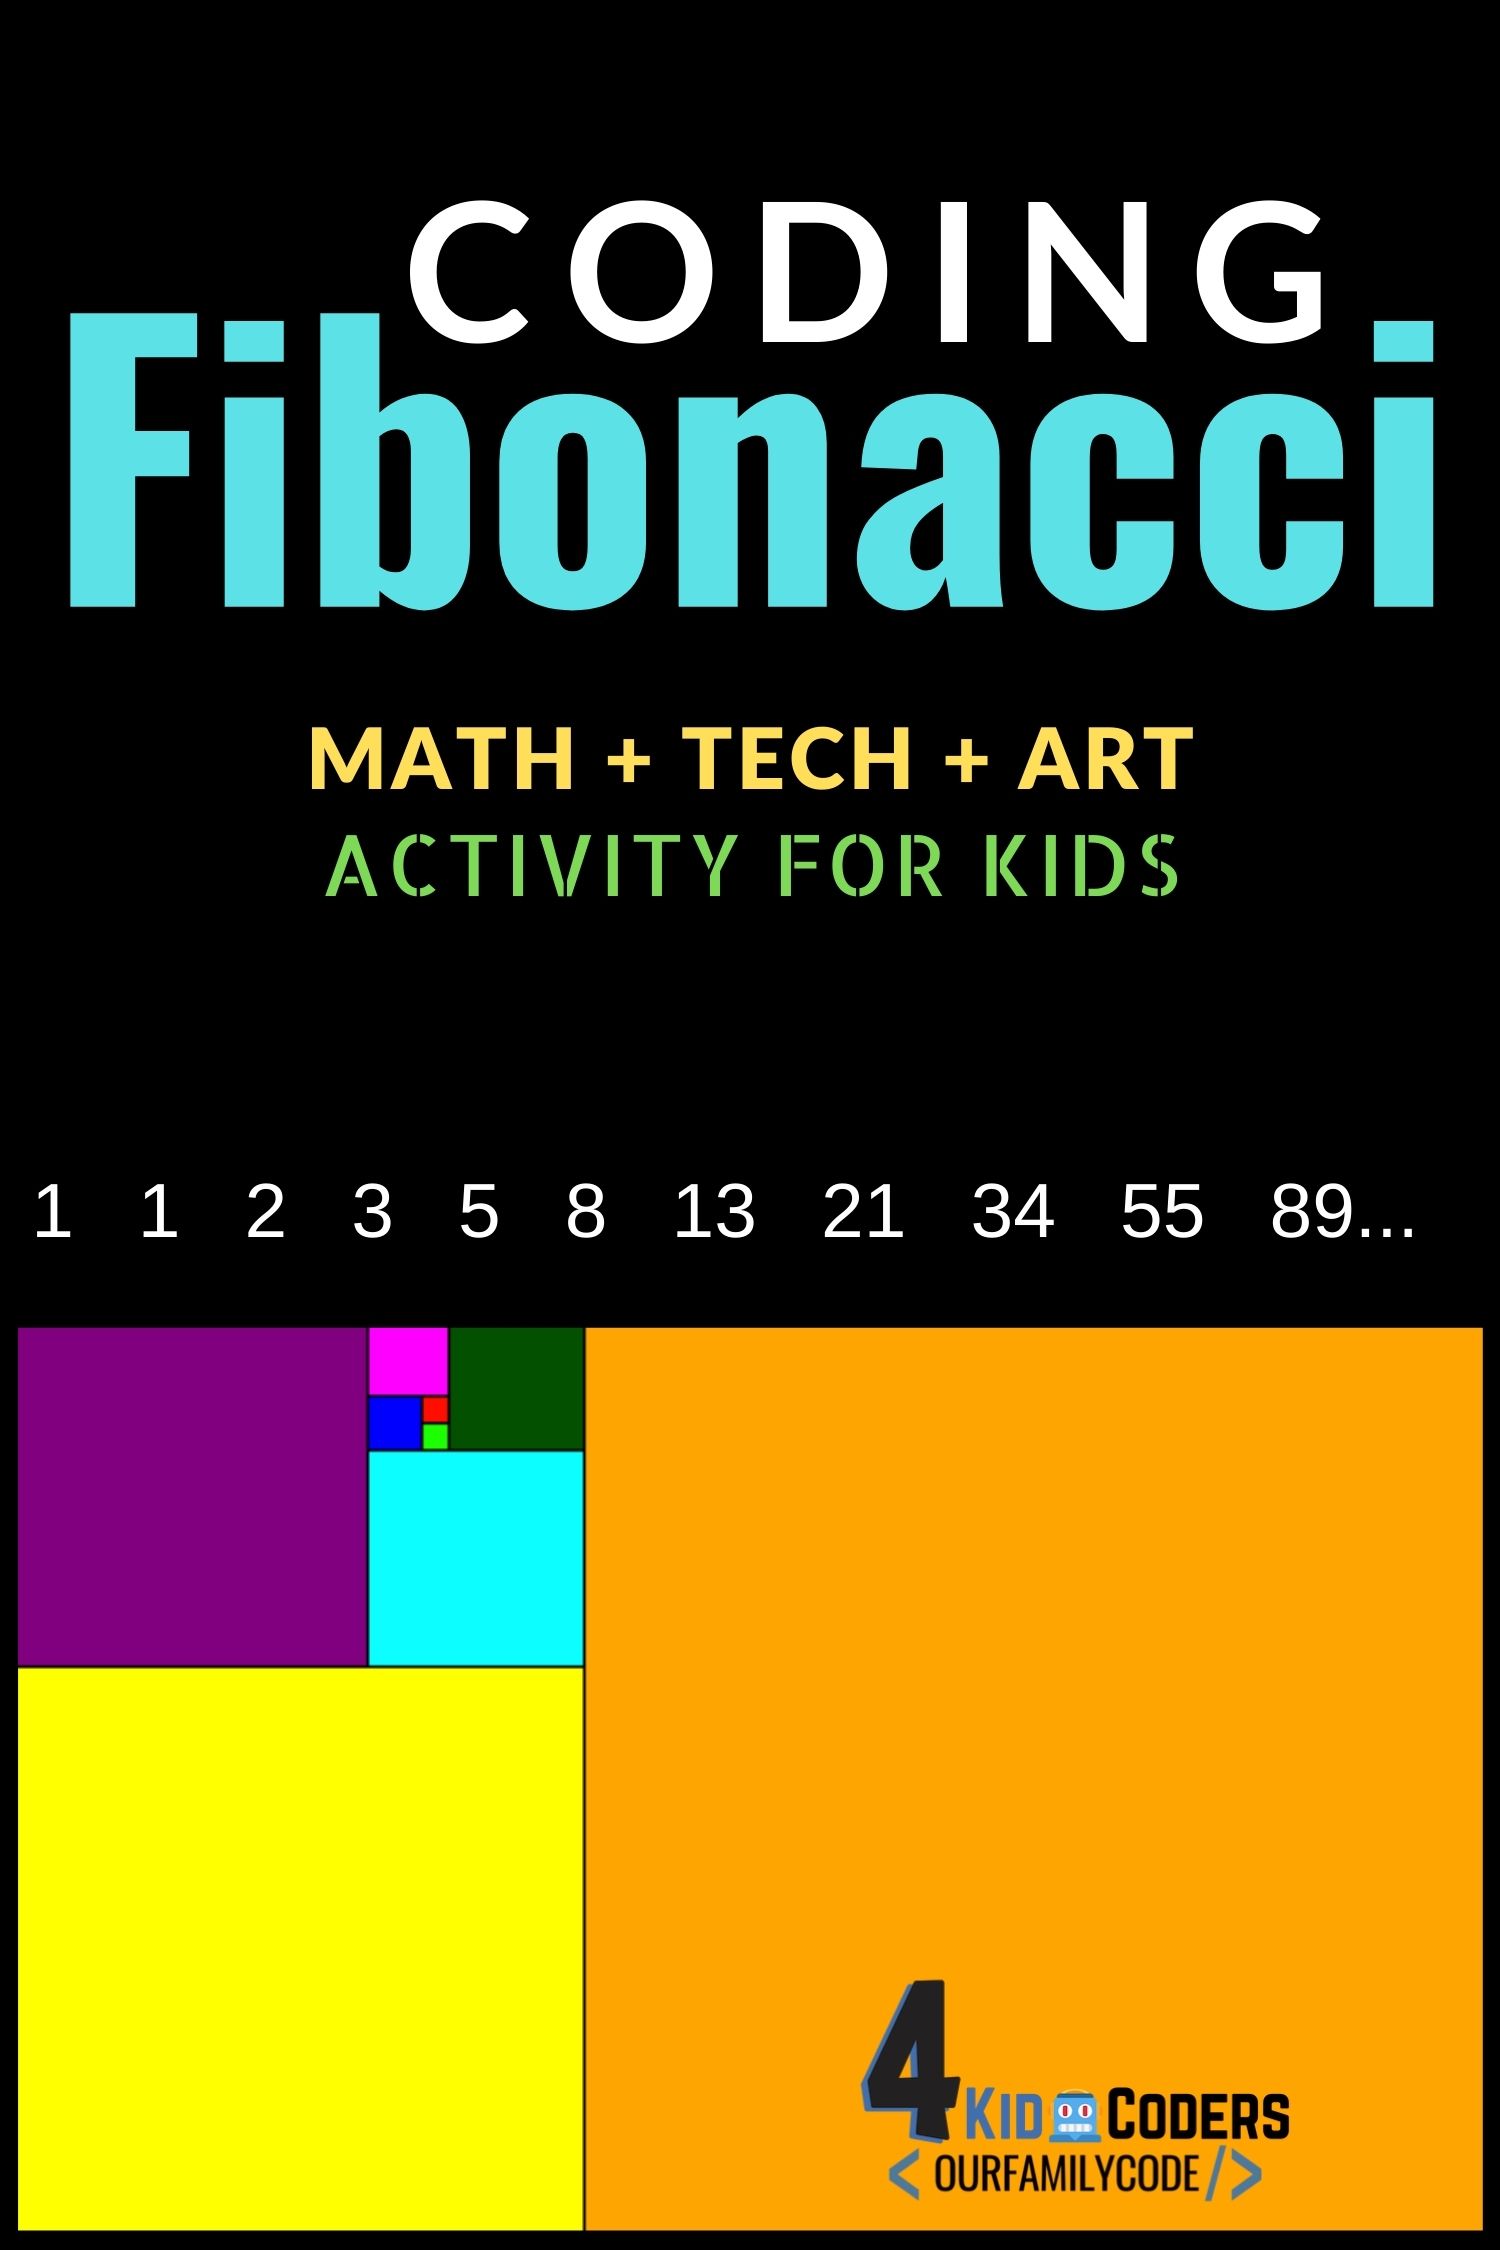 Are you ready to code Fibonacci rectangles and make some cool digital Fibonacci art? You don't want to miss this math + tech + art kid coding activity! #Fibonacci #STEAMkids #STEAM #STEM #homeschool #teachkidstocode